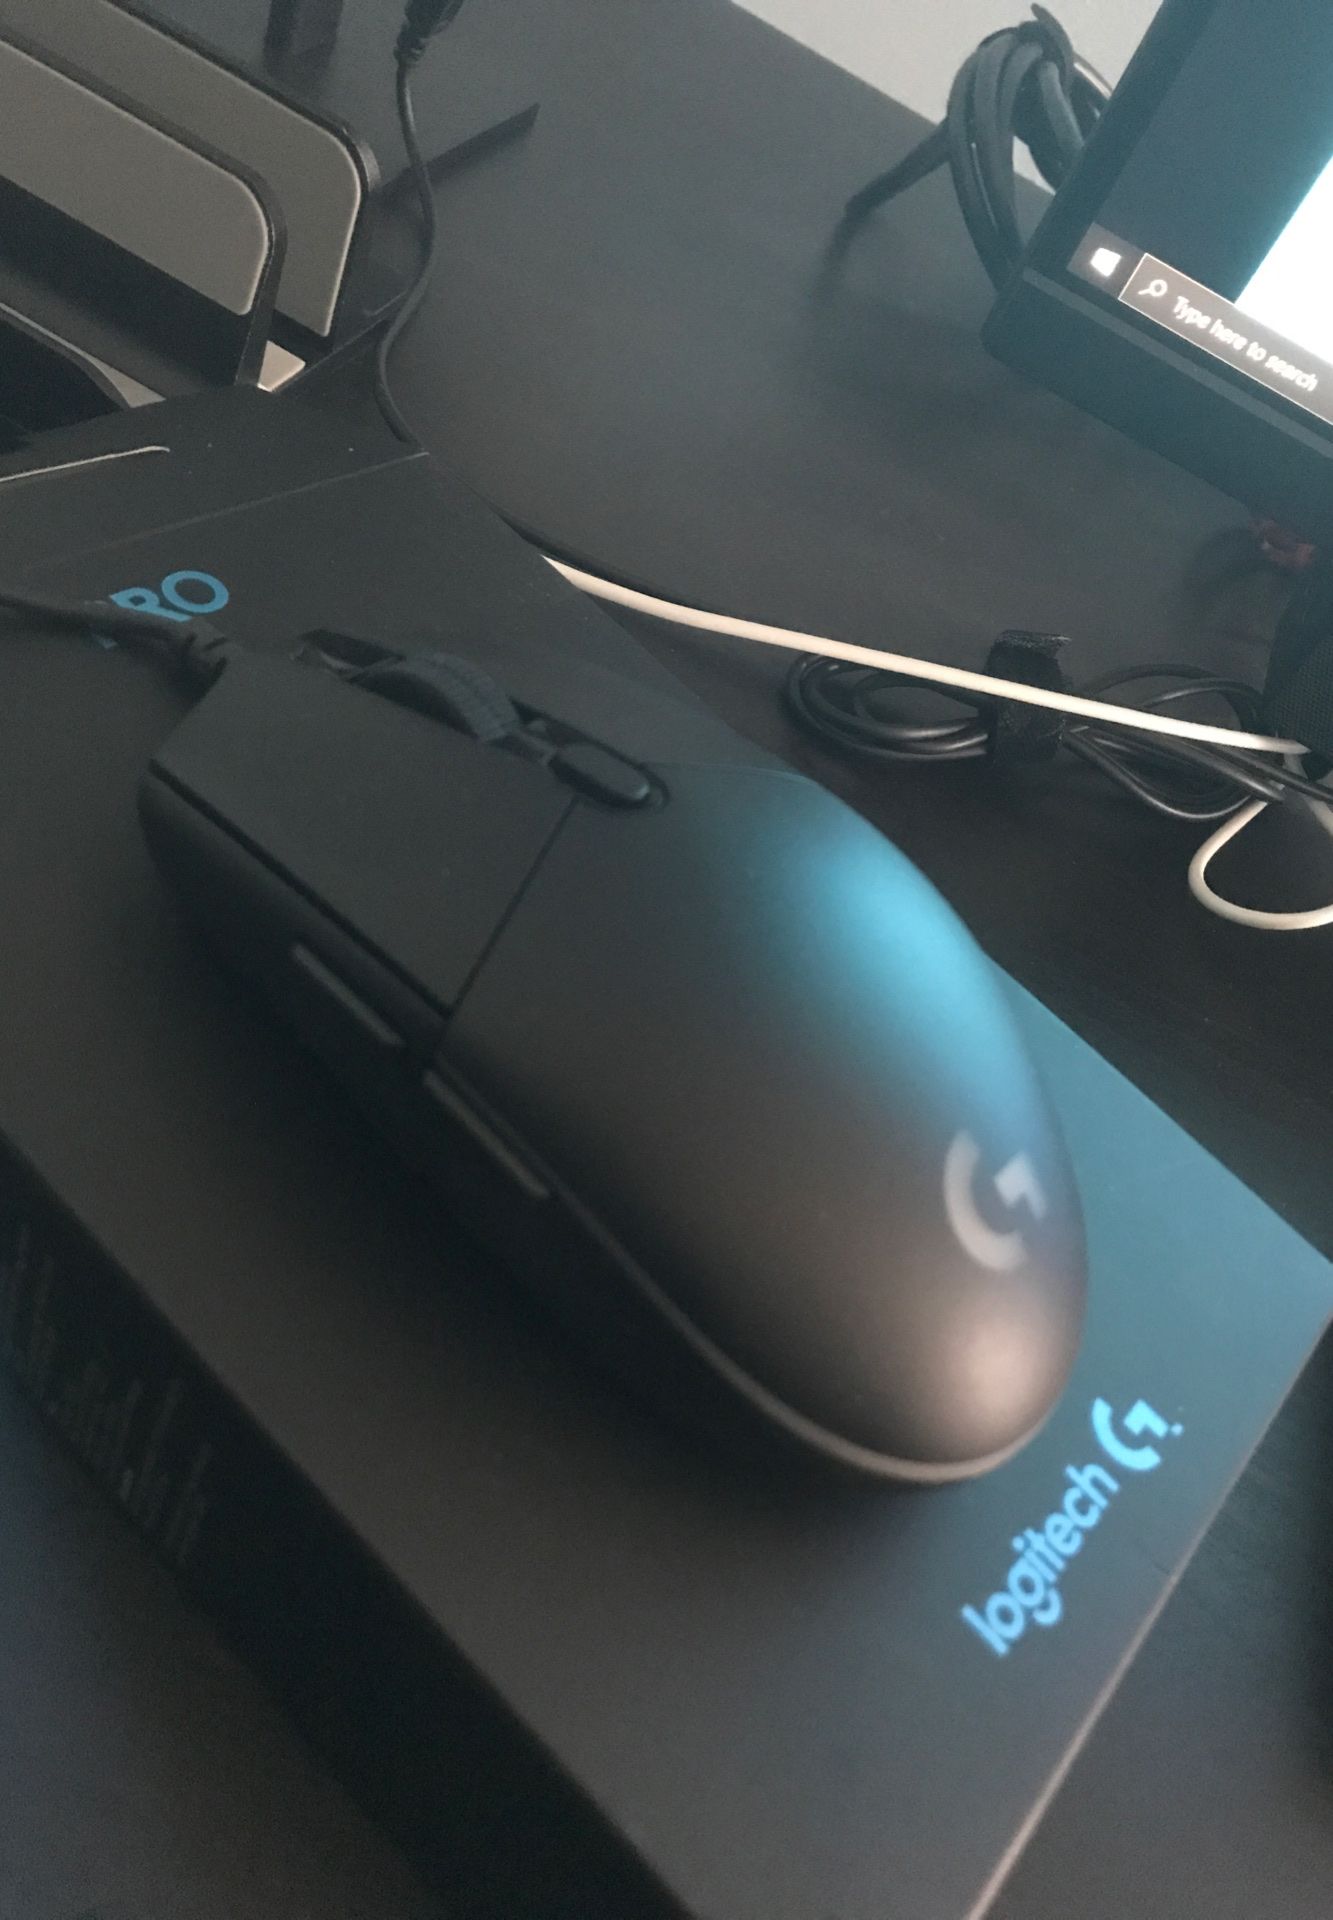 Logitech G Pro Gaming Mouse (Hero)